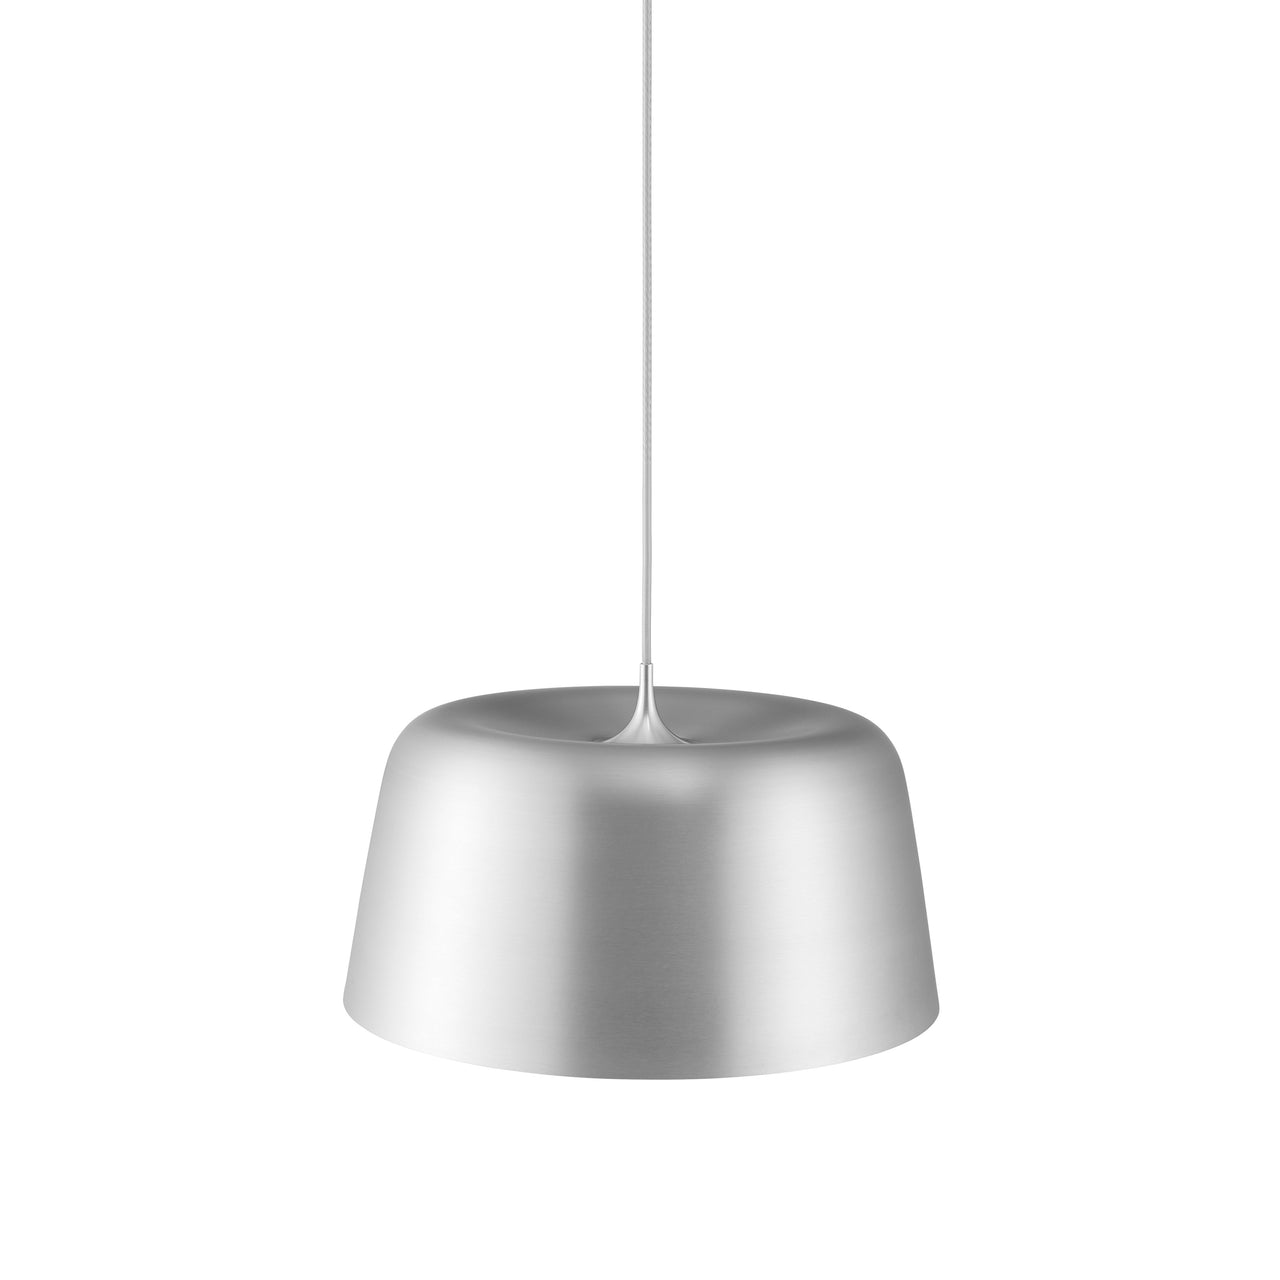 Tub Pendant Lamp: Large - 17.3